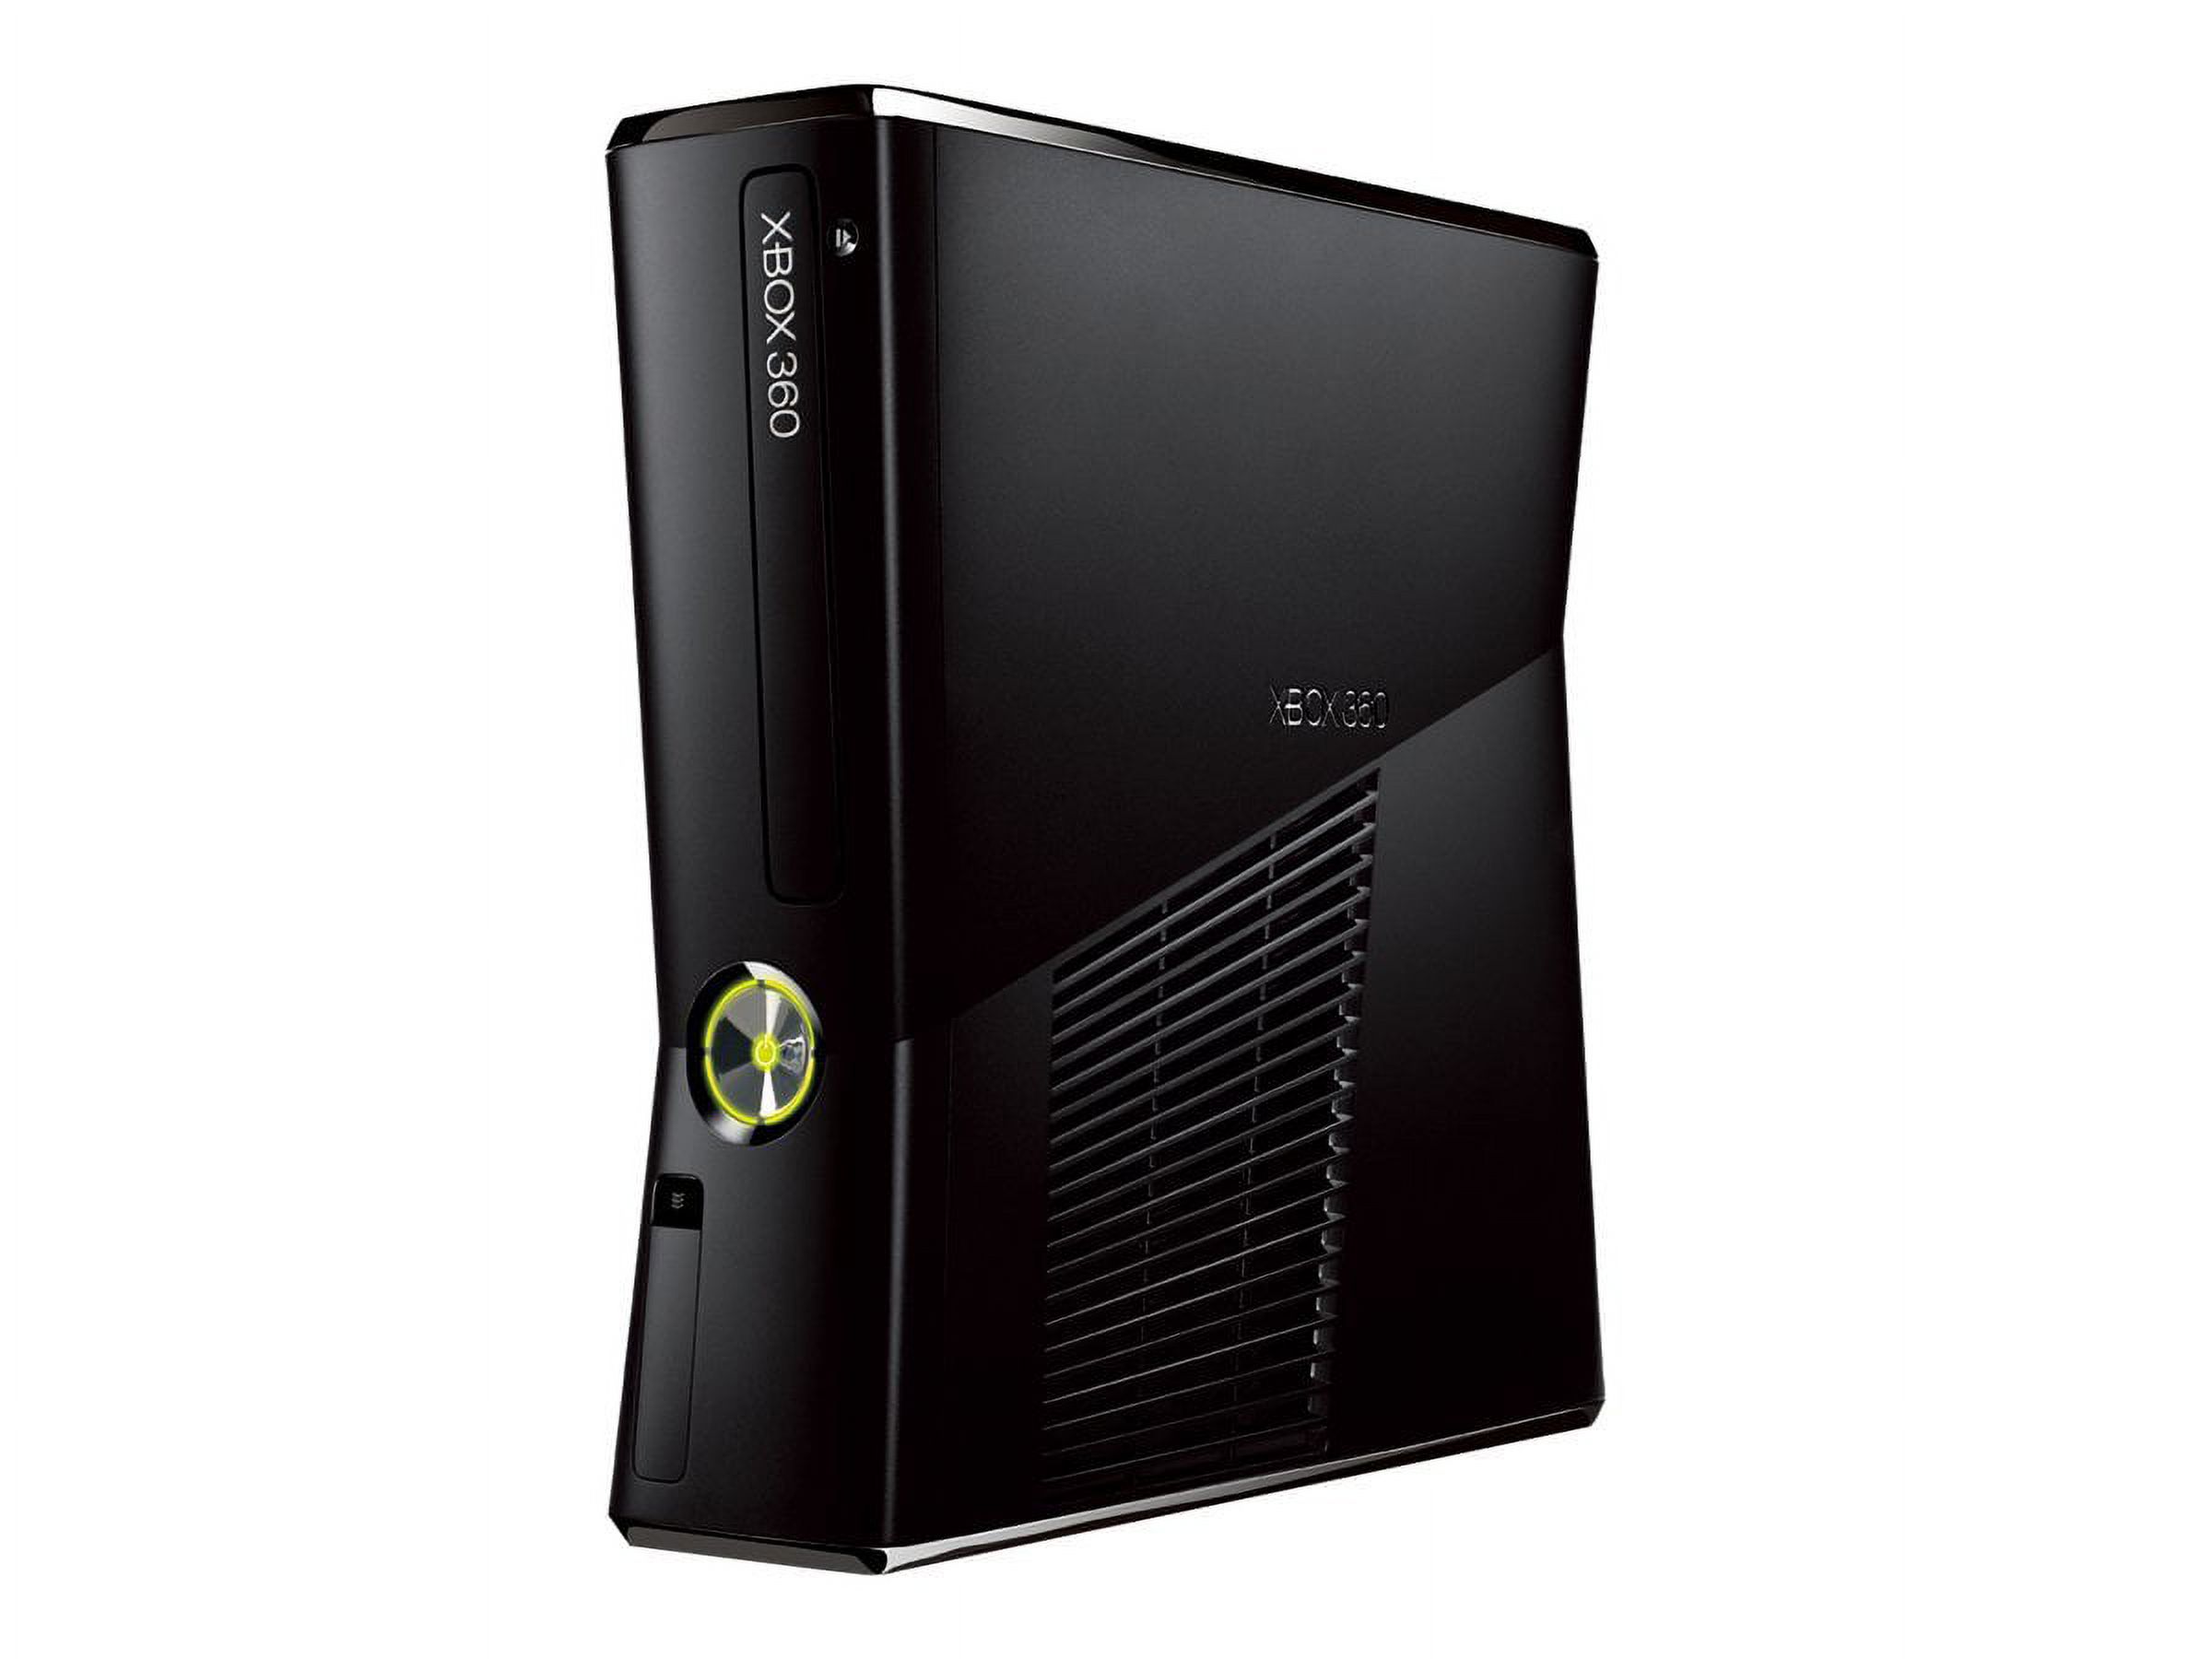 Restored Microsoft Xbox 360 Slim 250GB Console with Xbox Kinect, Black (Refurbished) - image 2 of 5